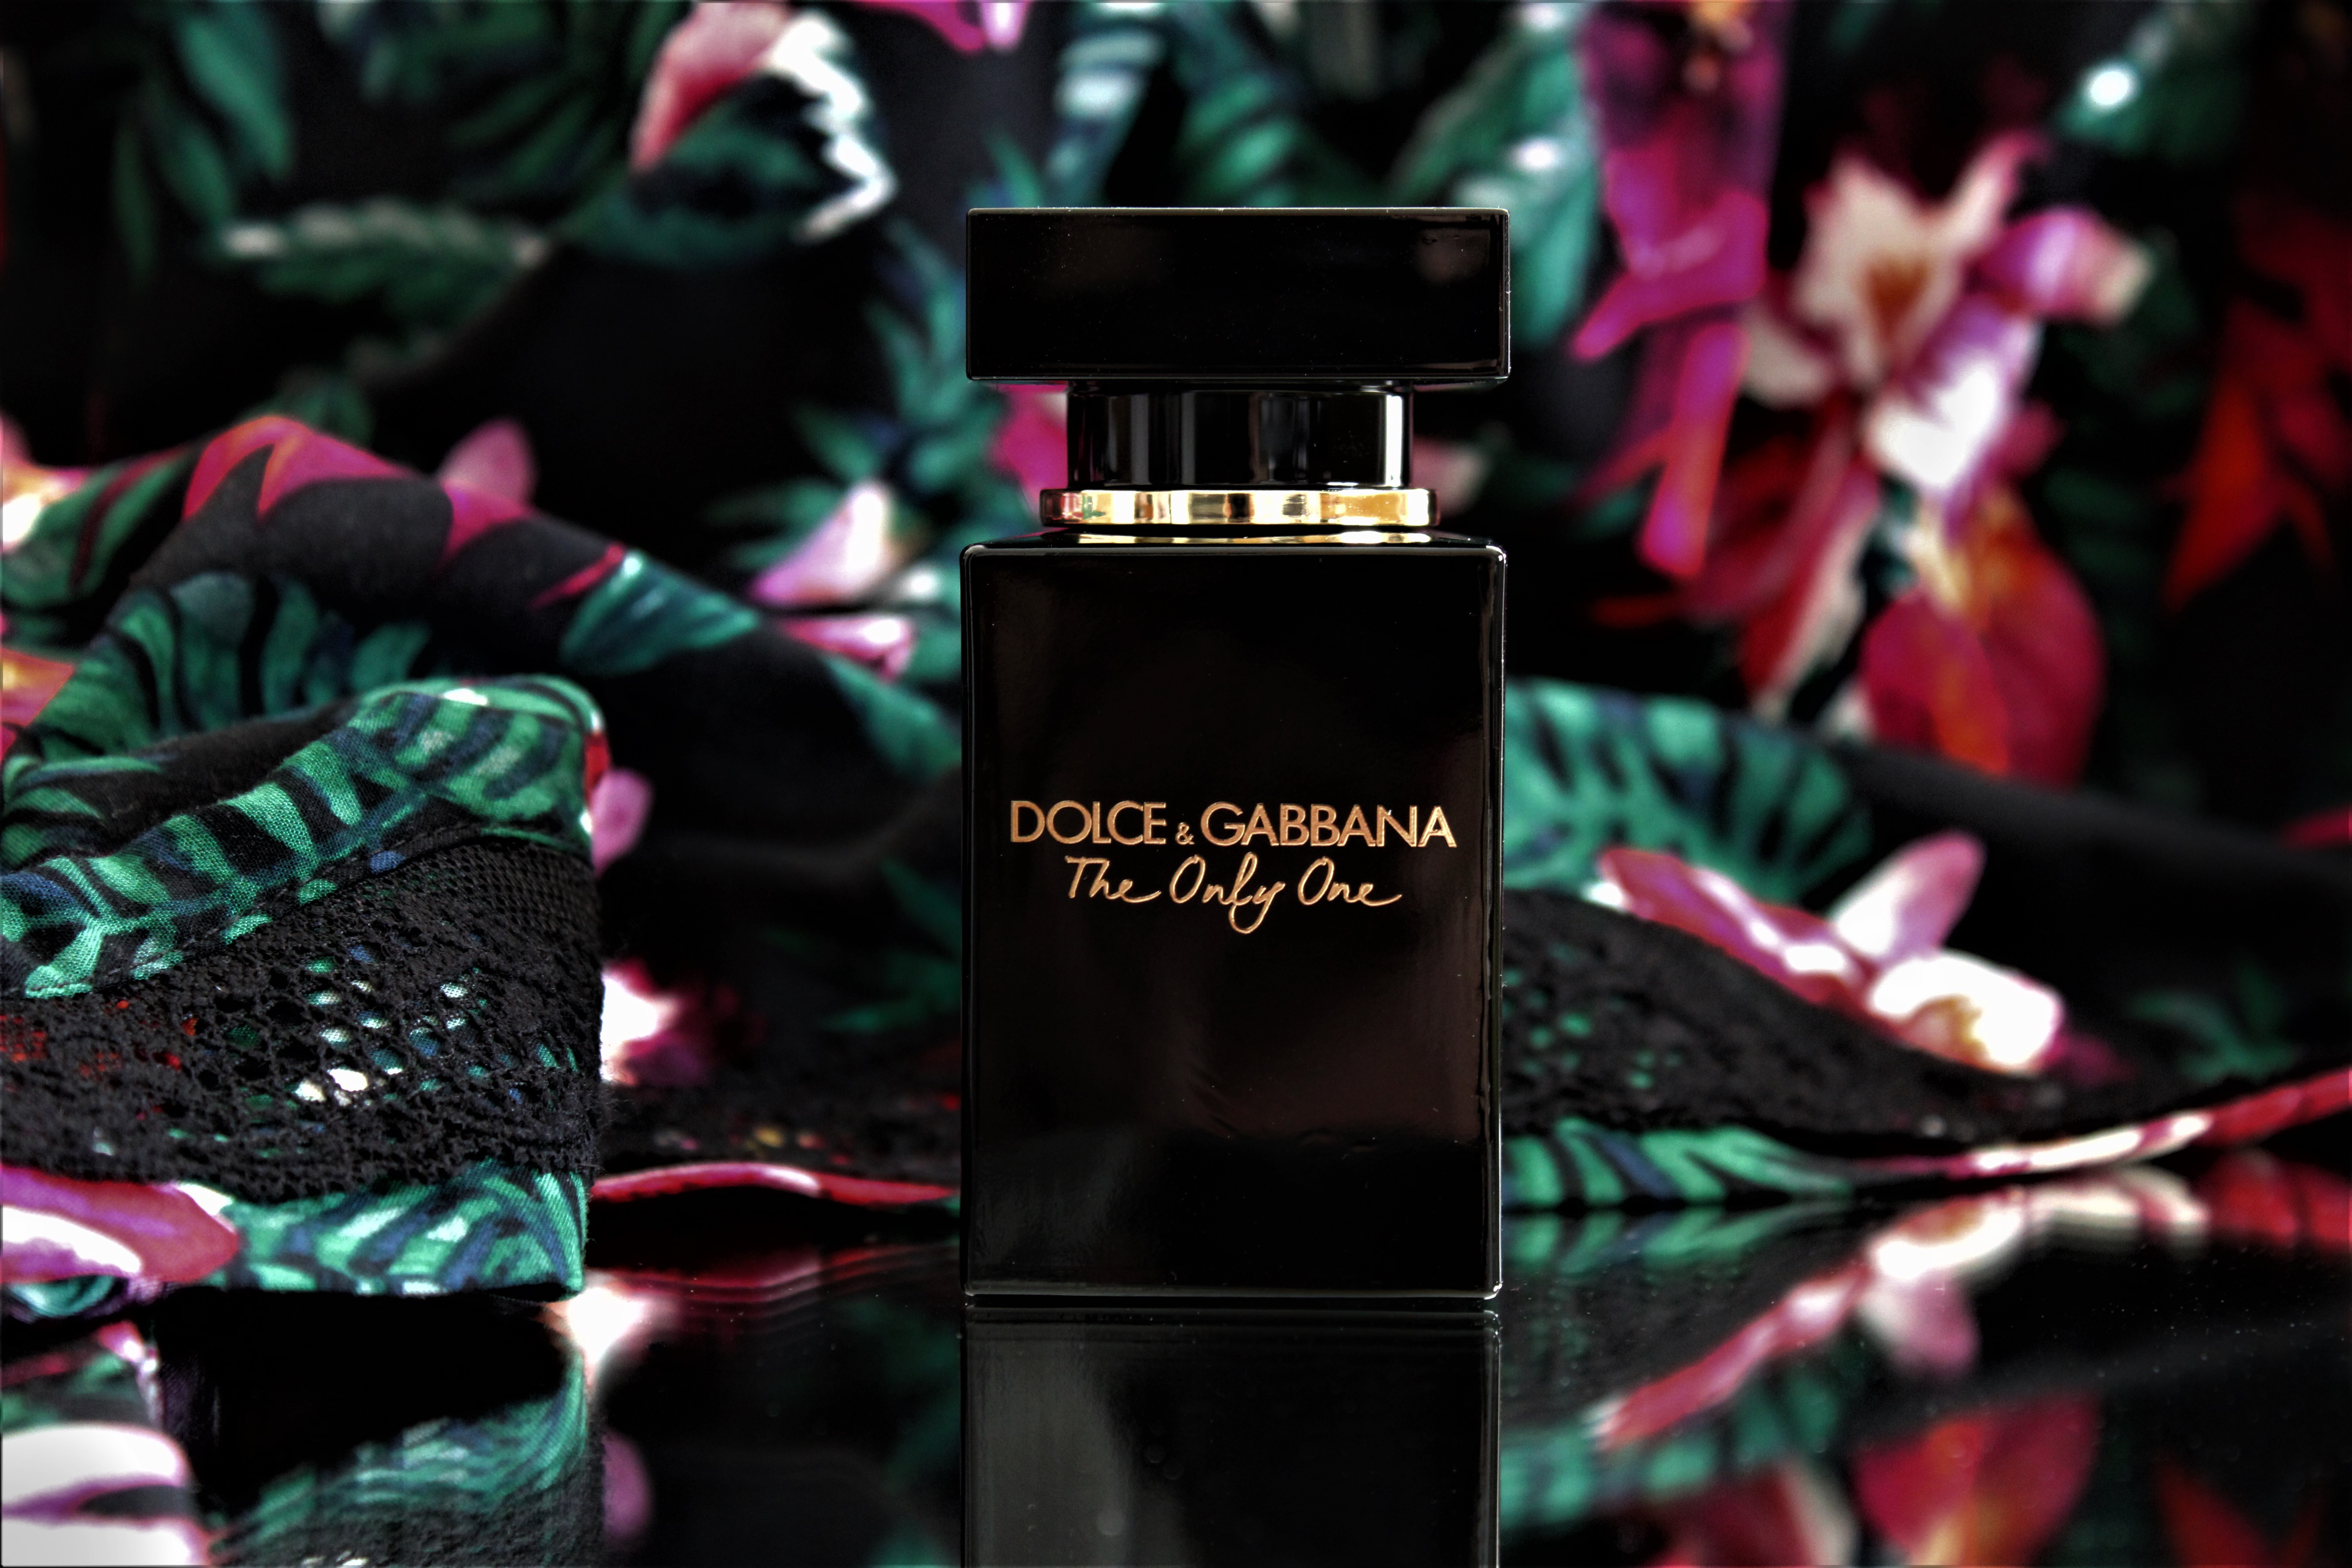 Дольче габбана интенс отзывы. Dolce Gabbana the only one EDP intense. The only one Eau de Parfum intense Dolce&Gabbana. Dolce Gabbana intense. Дольче Габбана Парфюм Интенс женские.